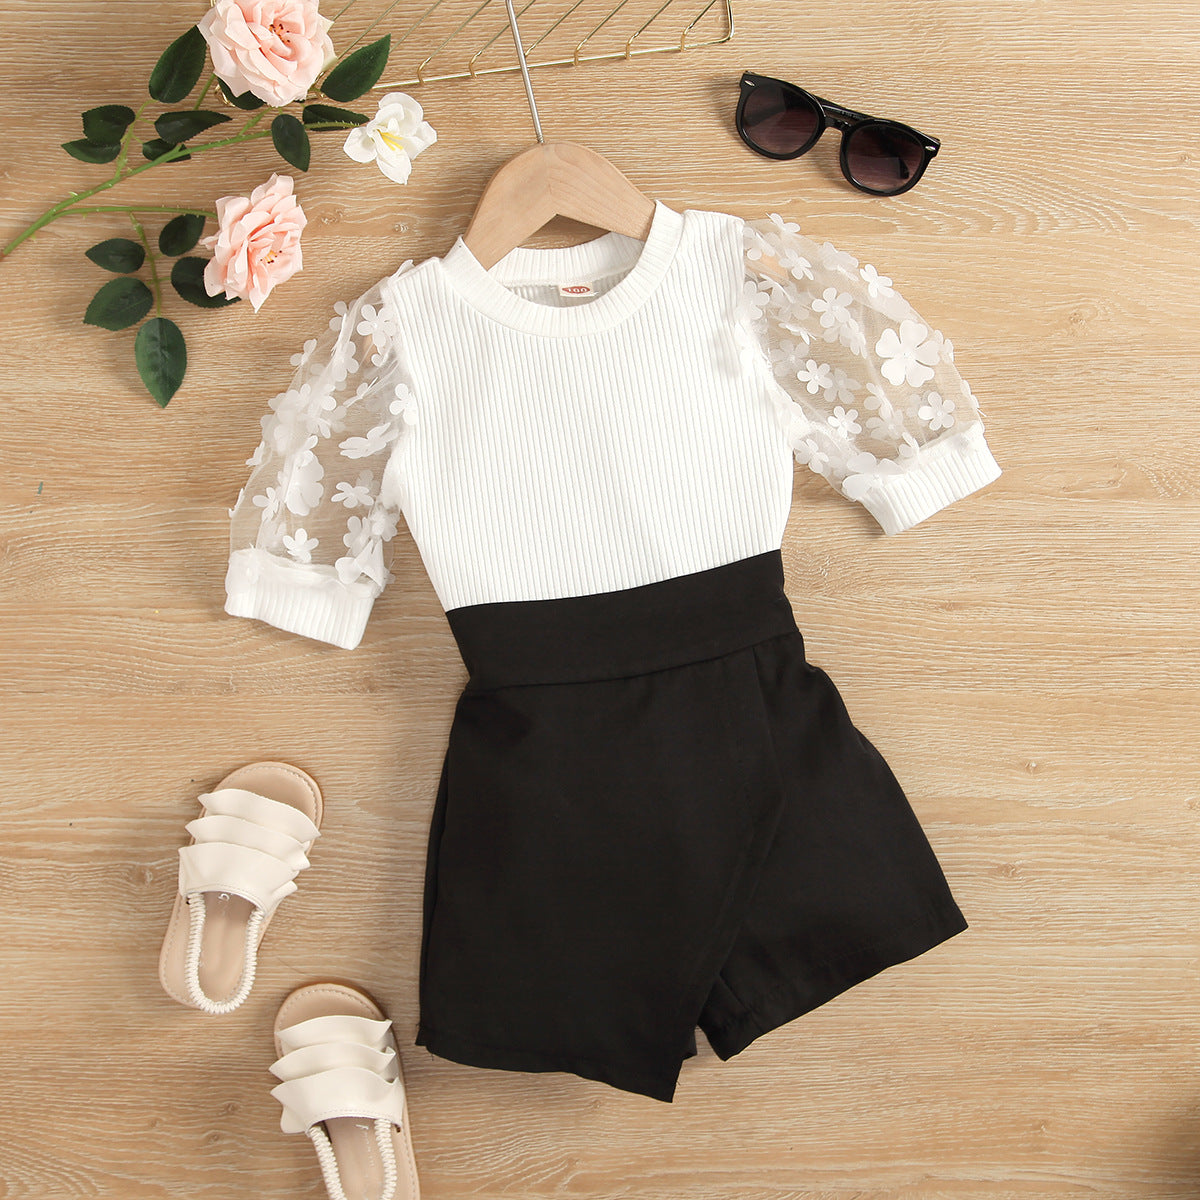 Floral Mesh Sleeve Top & Black Skirt Set for Stylish Girls